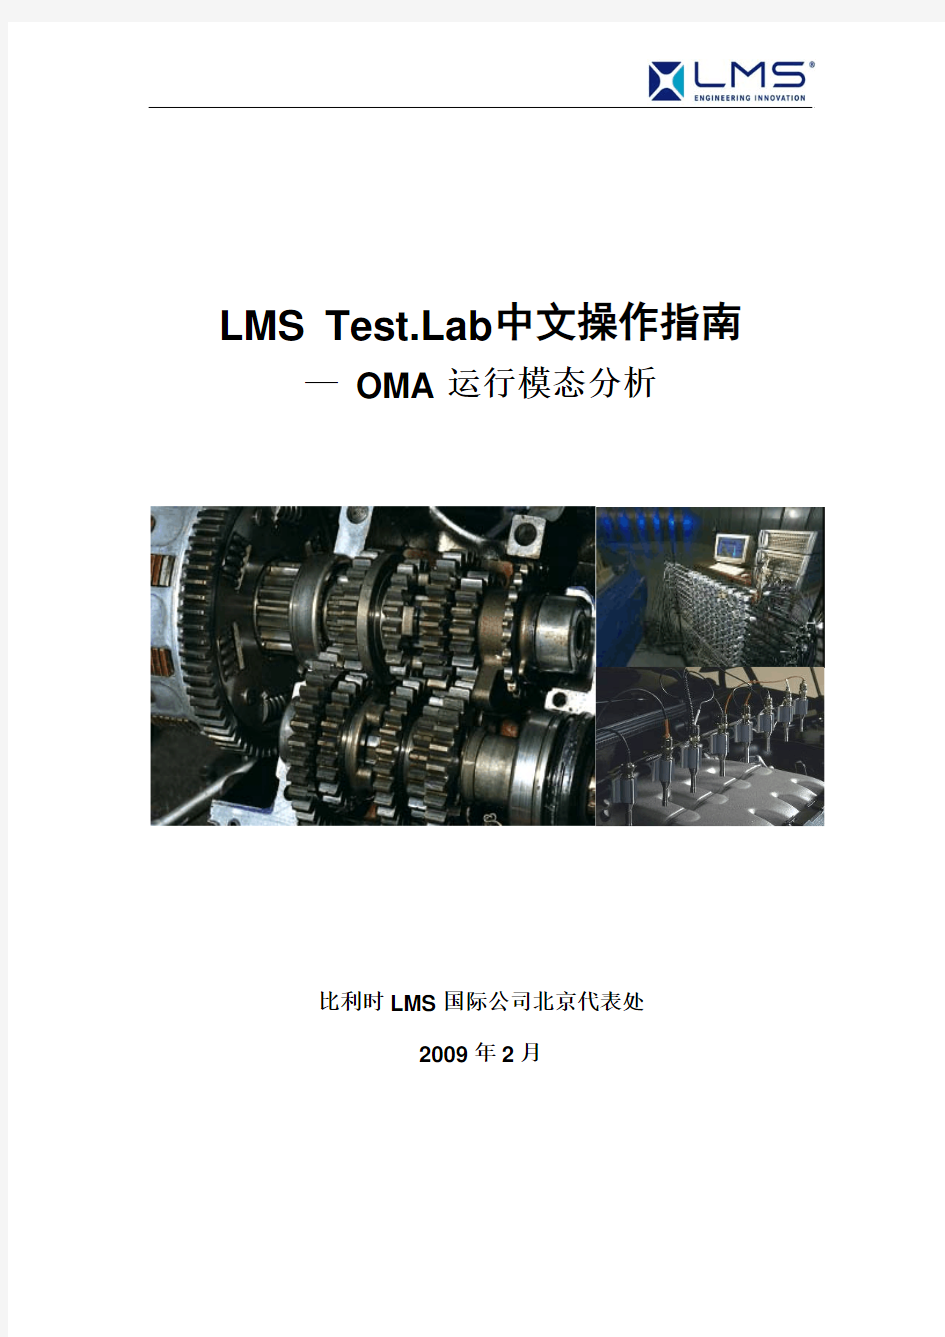 LMS Test.Lab中文操作指南_OMA运行模态分析